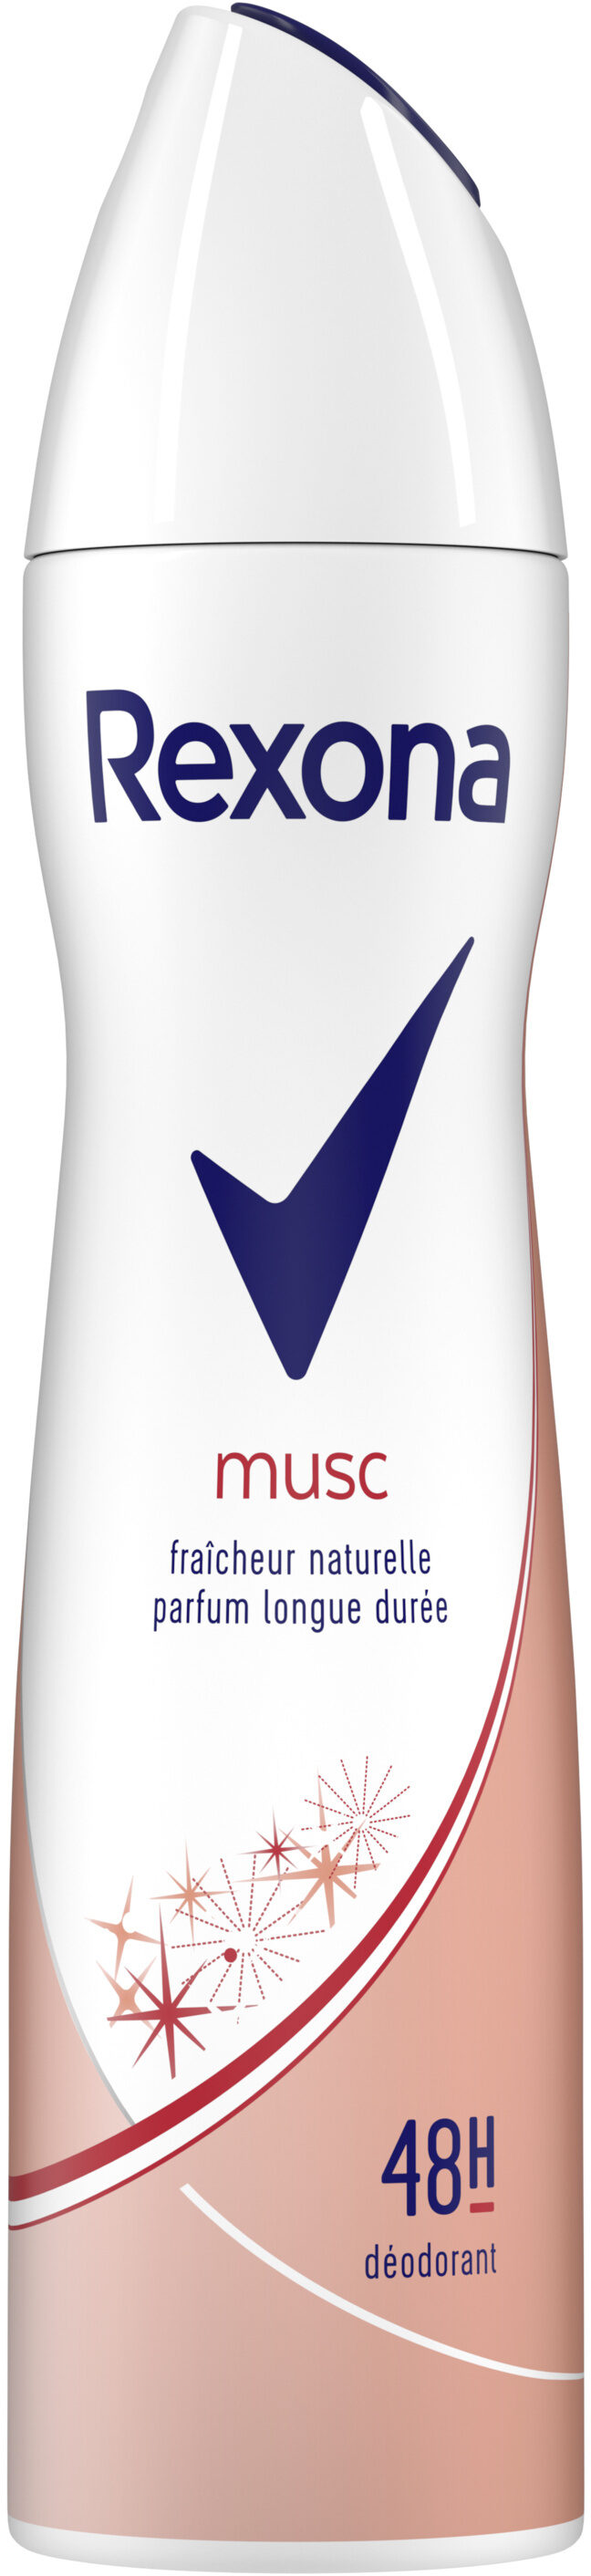 Rfw 200ml spray musc - Tuote - fr